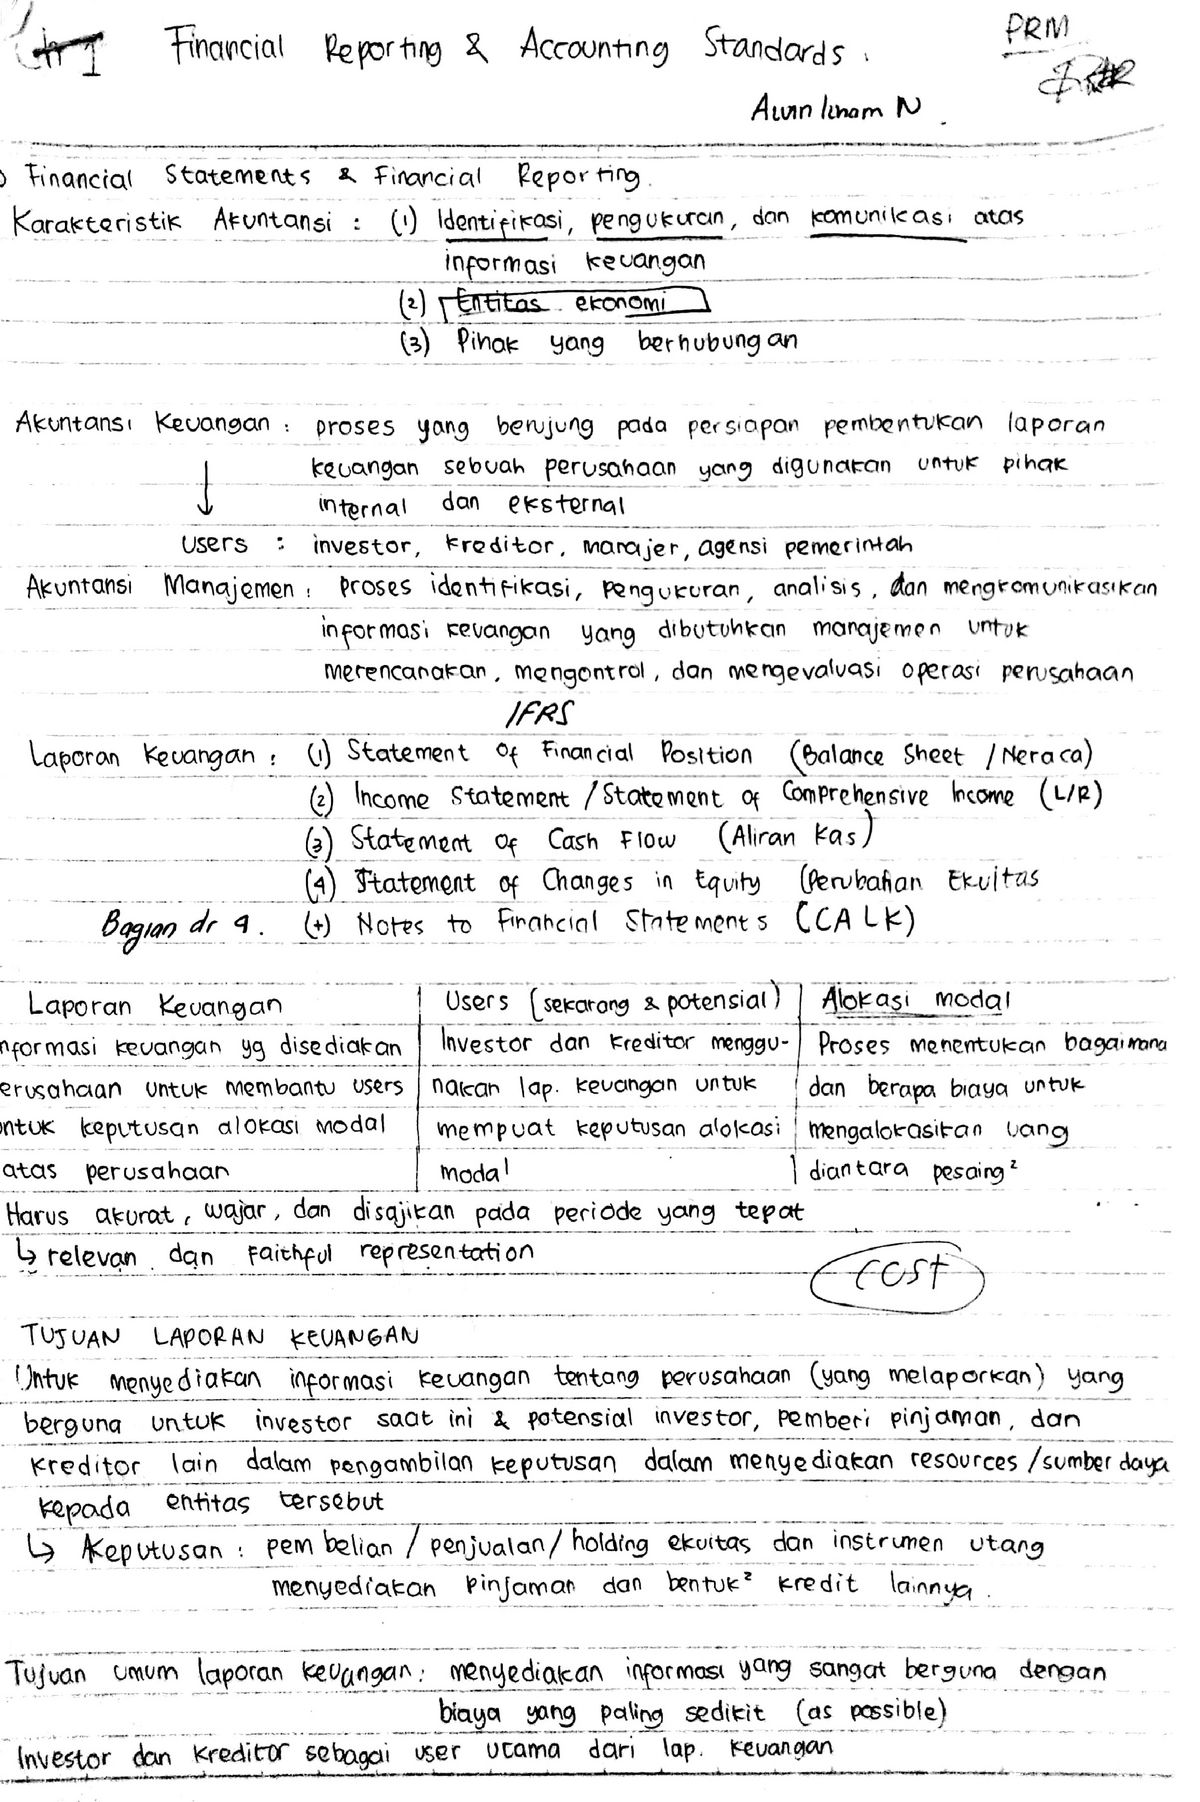 Resume AKM 1 - Summary Kieso Intermediate Accounting - M 